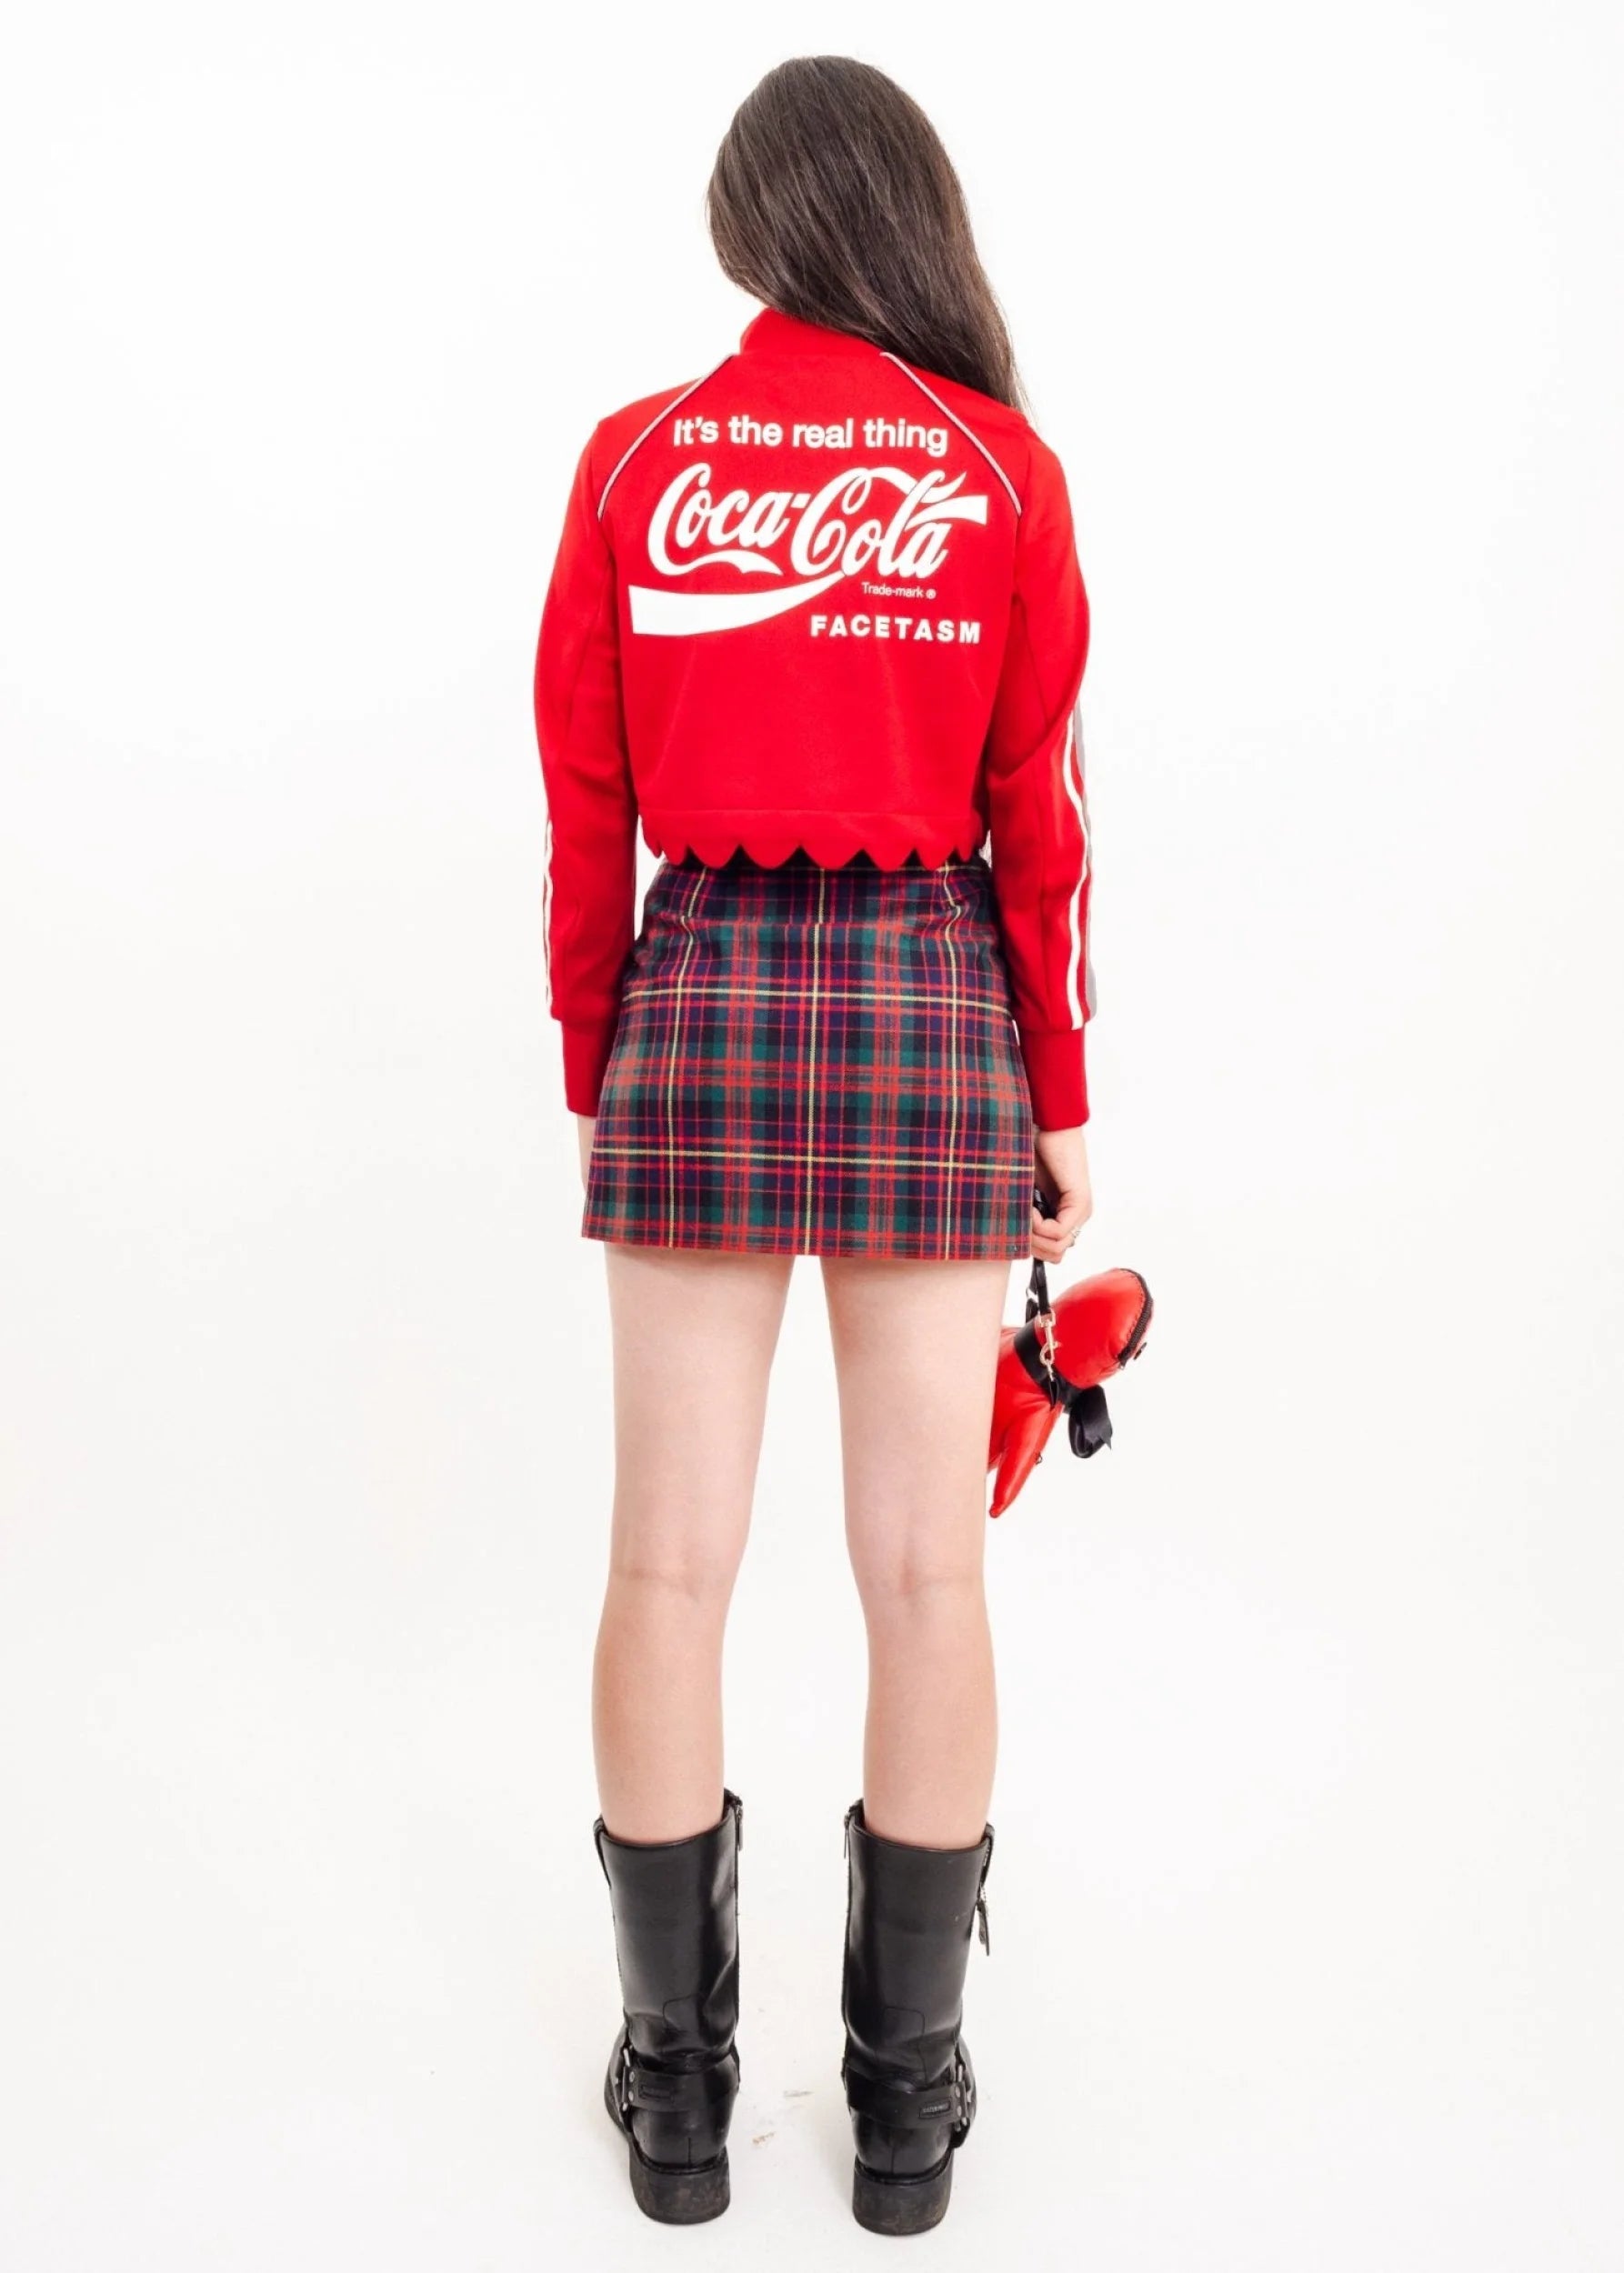 Facetasm Coca Cola x Facetasm cropped tracksuit jacket